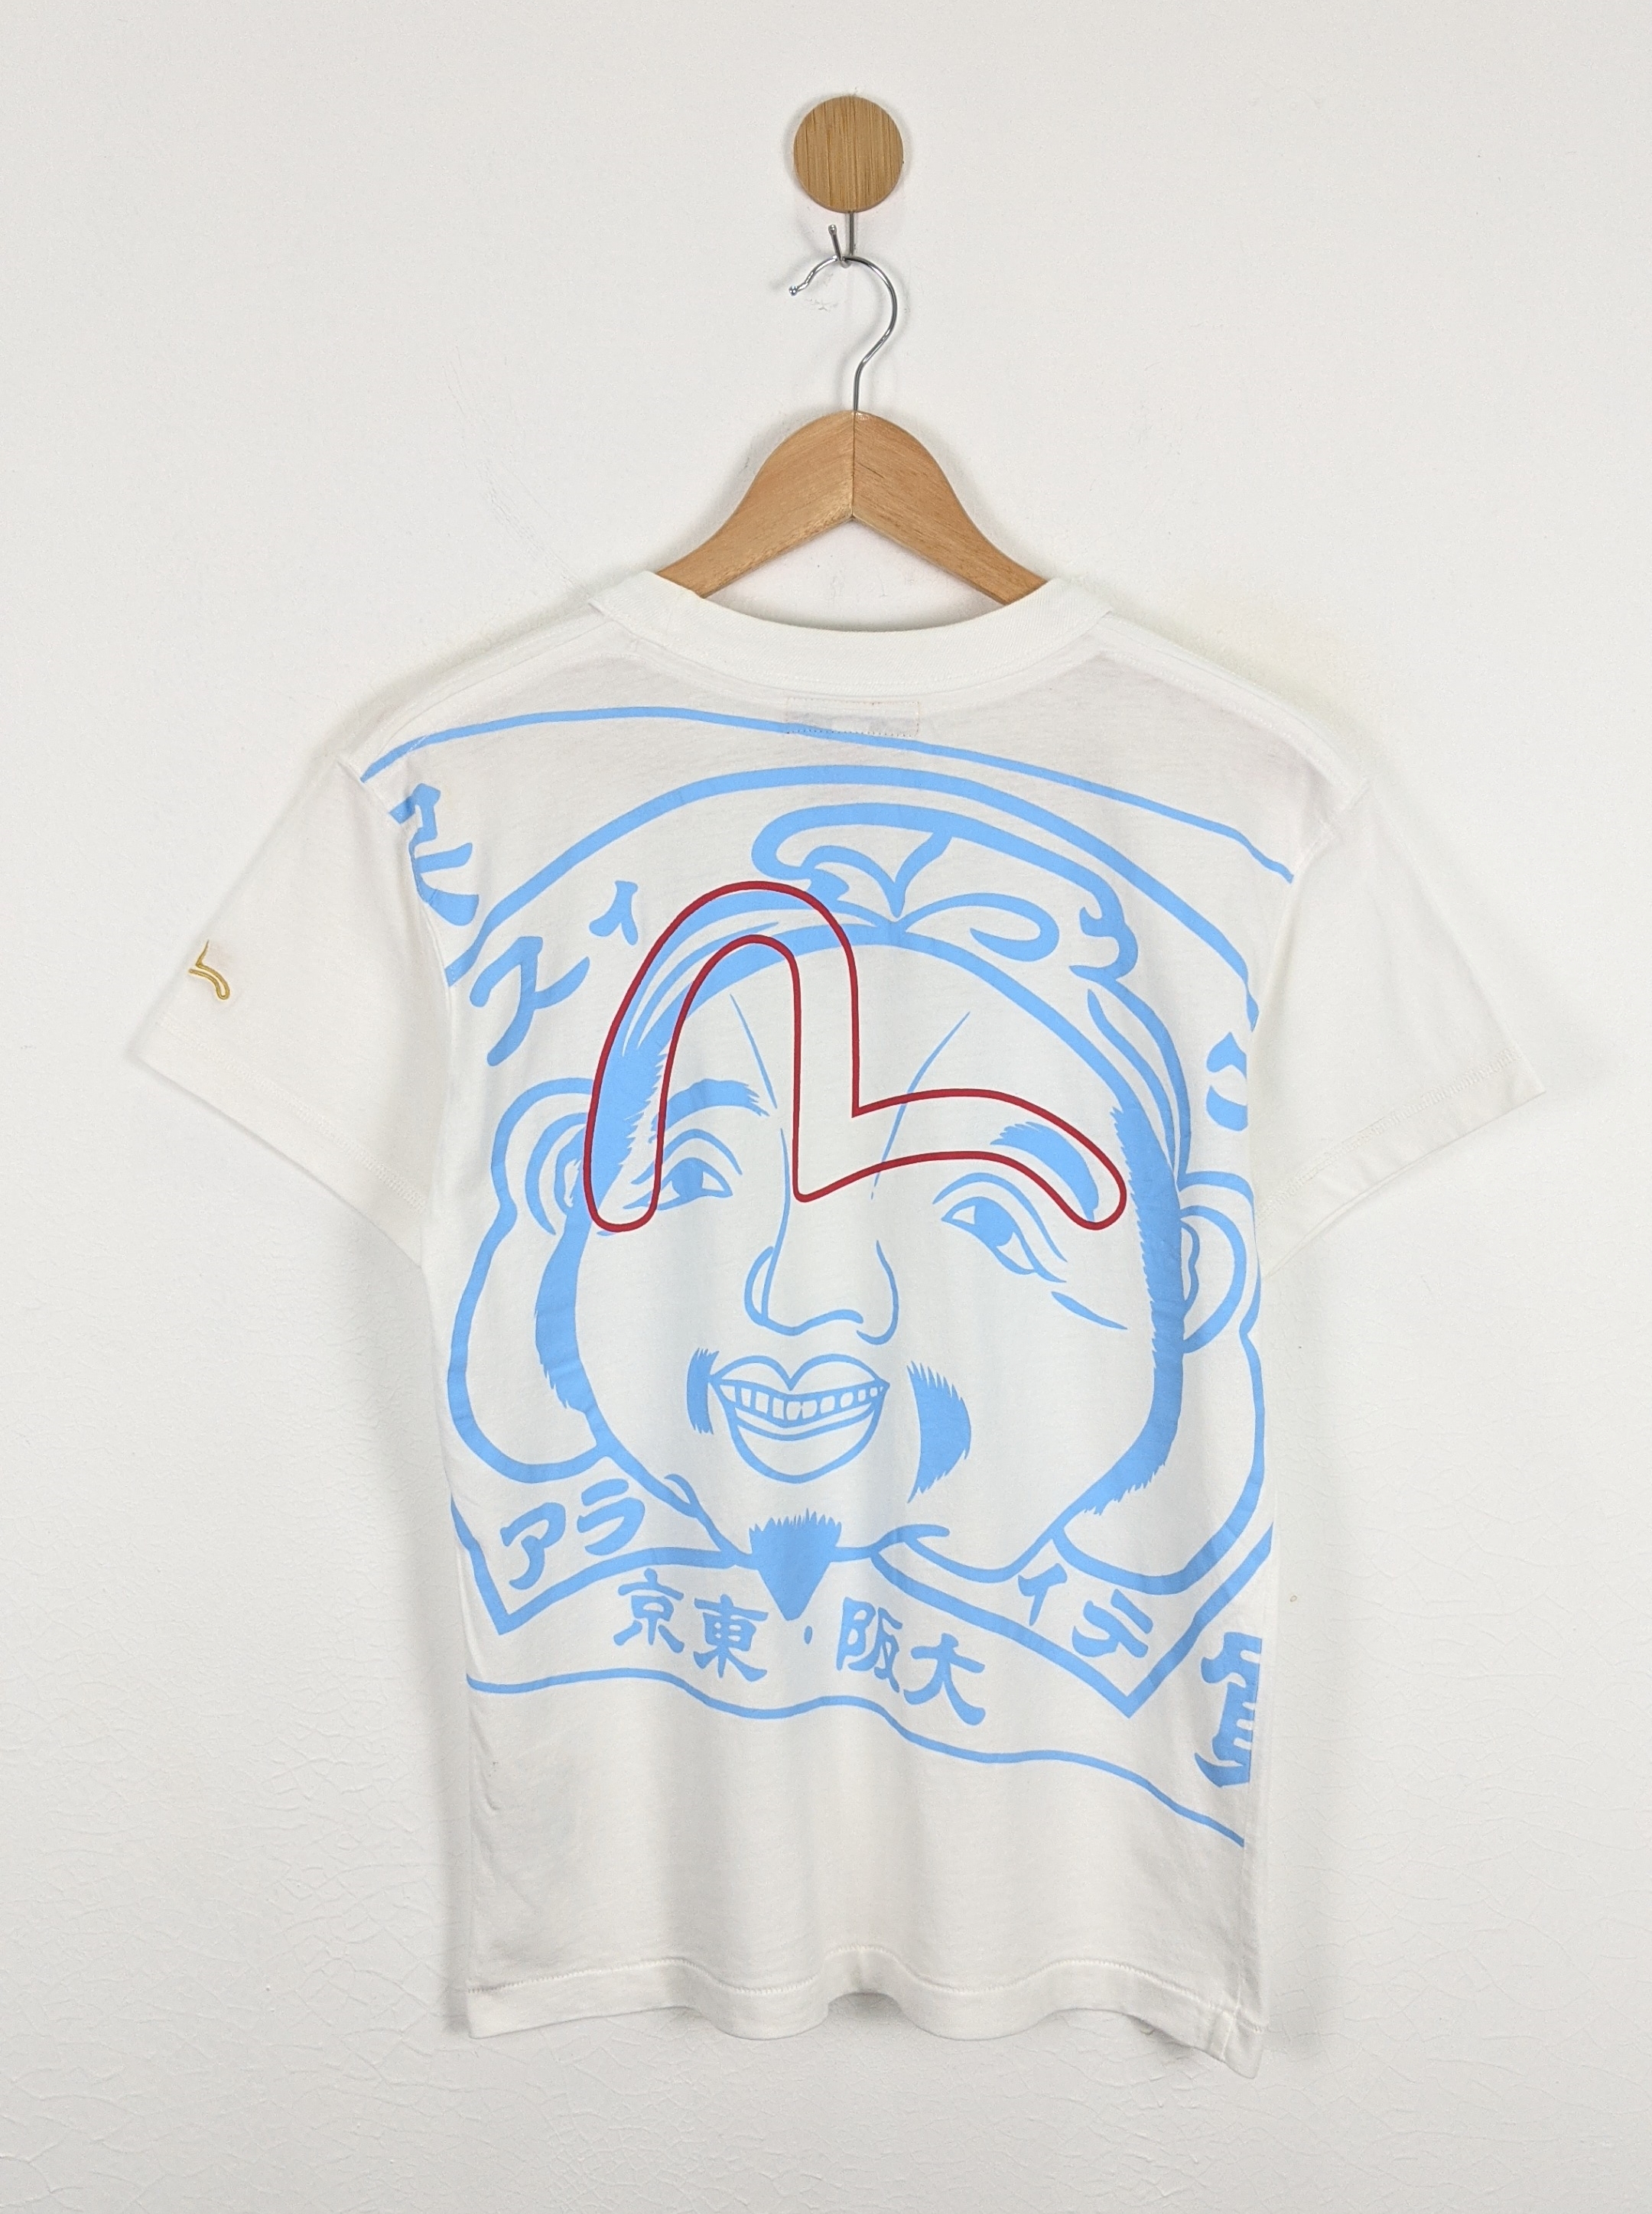 Evisu Yamane Embroidery shirt - 1